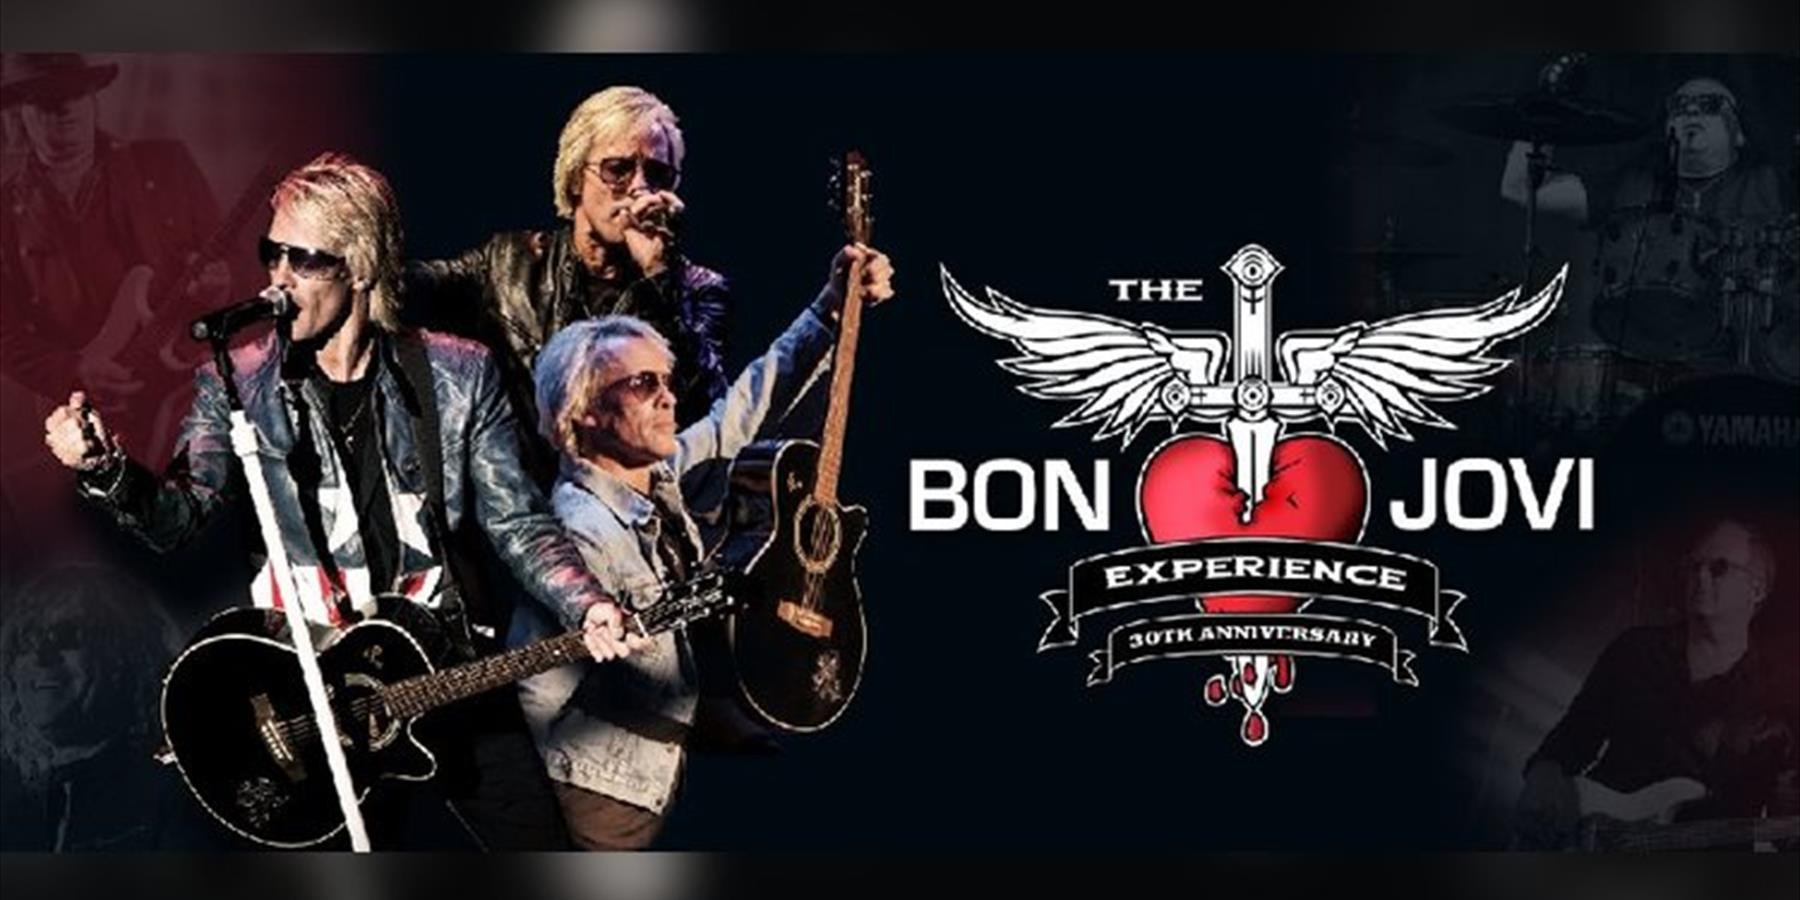 The Bon Jovi Experience